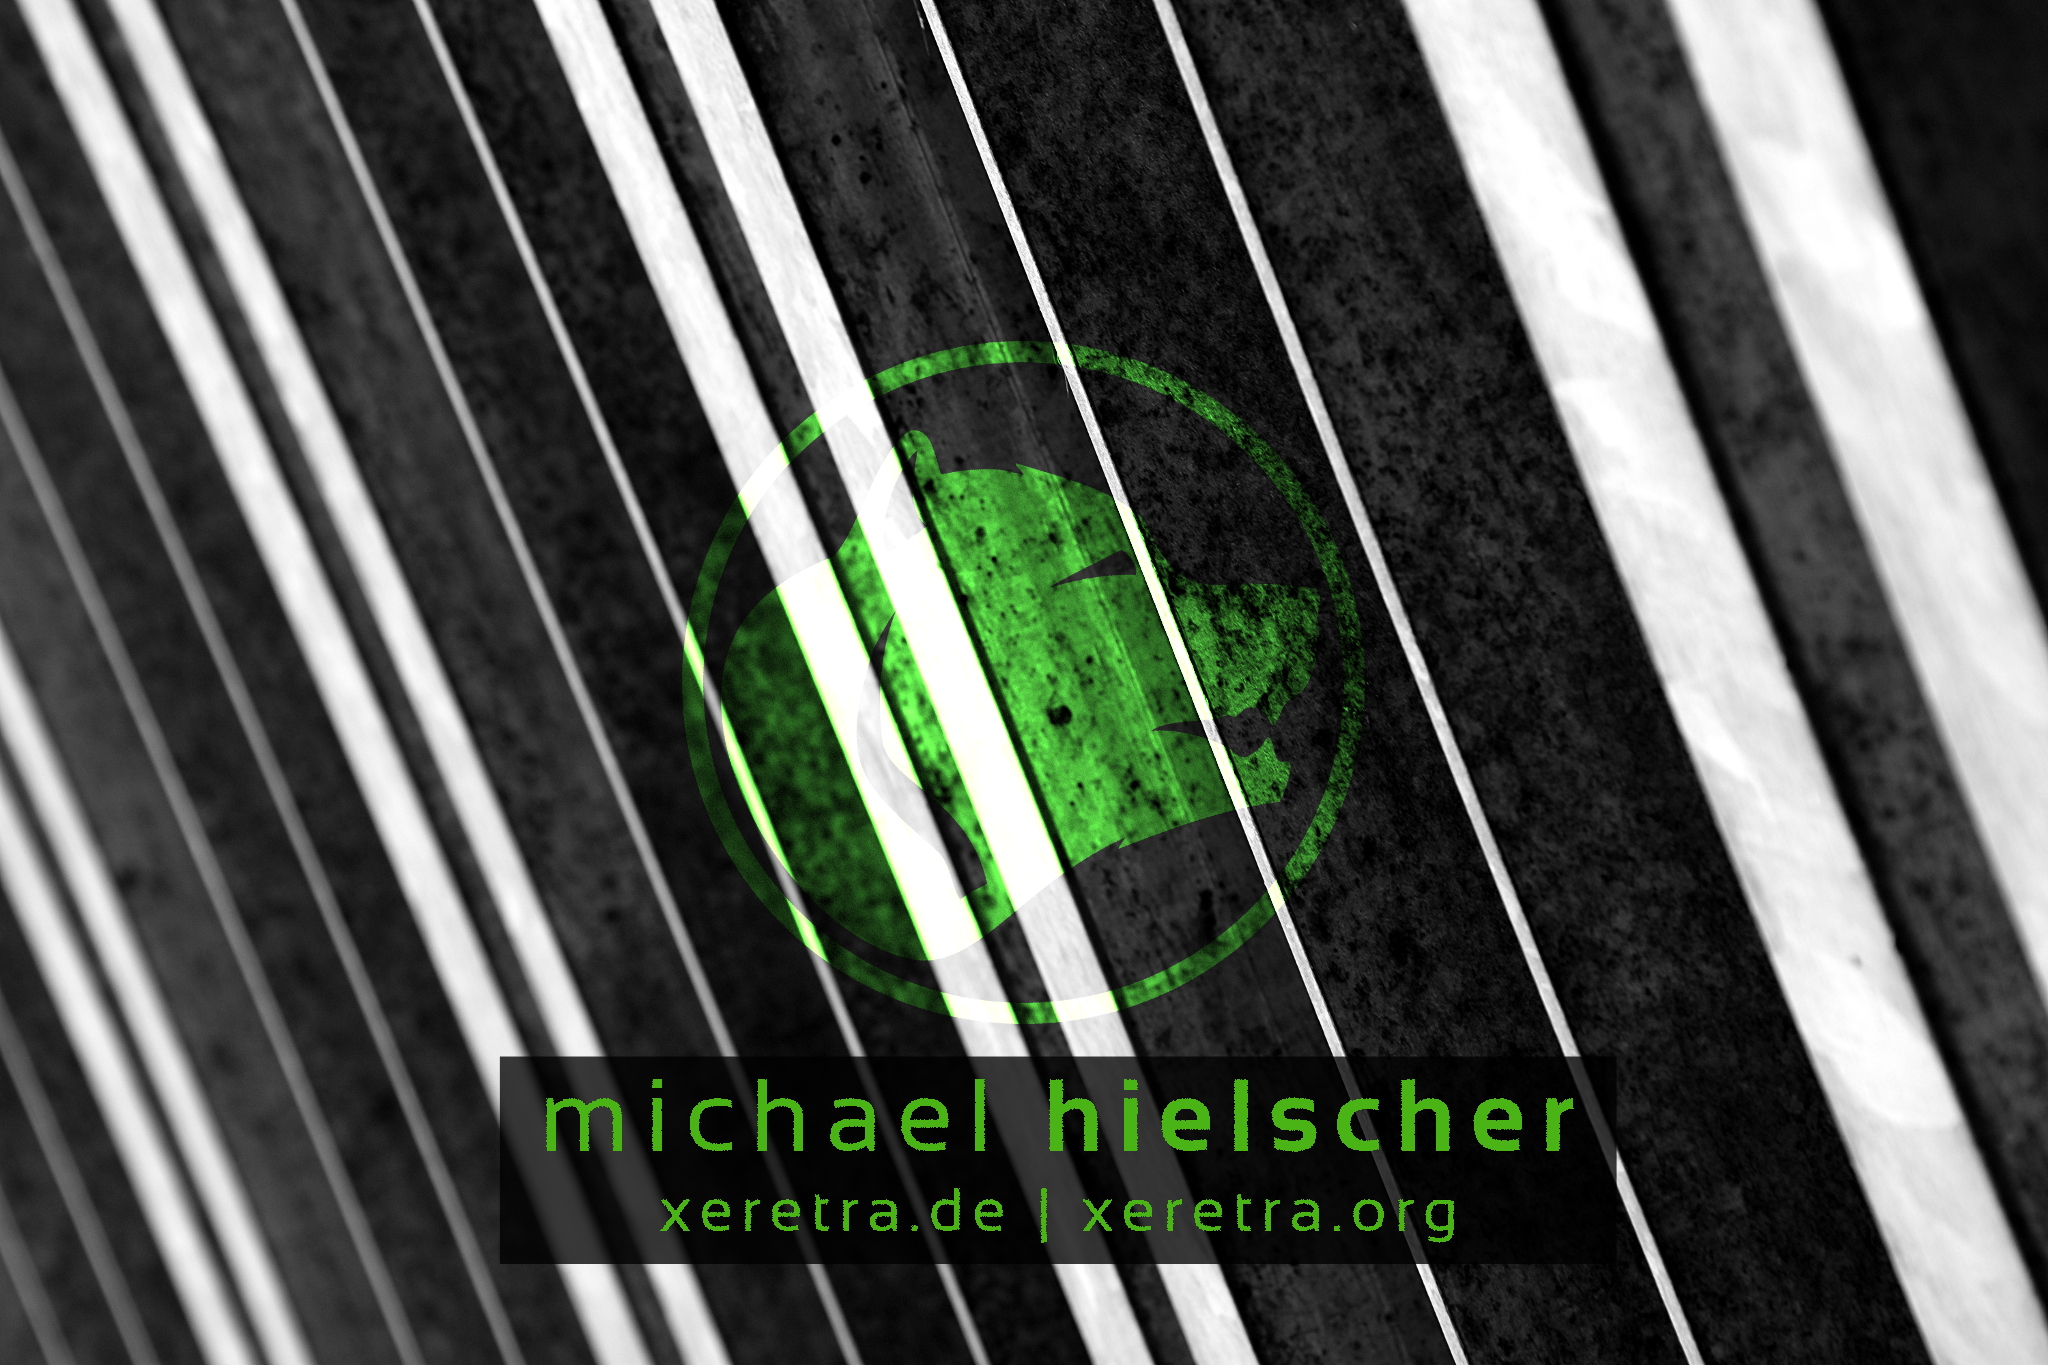 michael hielscher - xeretra.de - xeretra.org